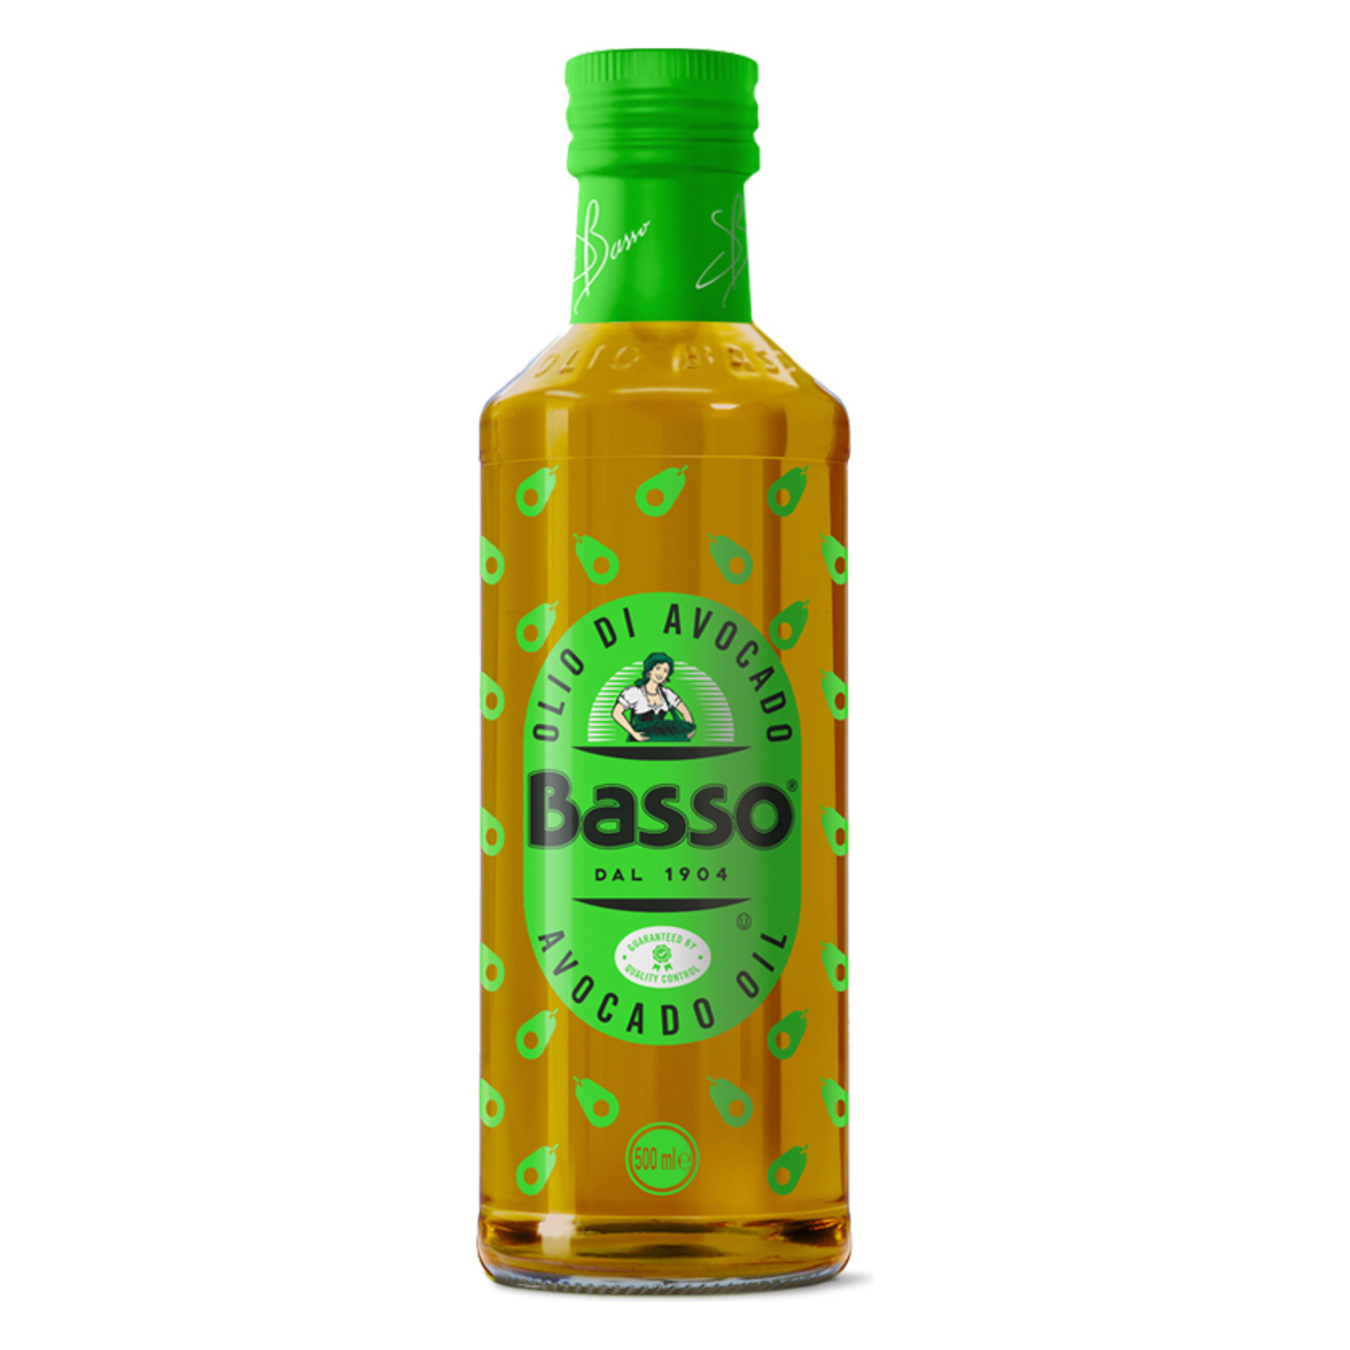 Basso avocado oil 500 ml